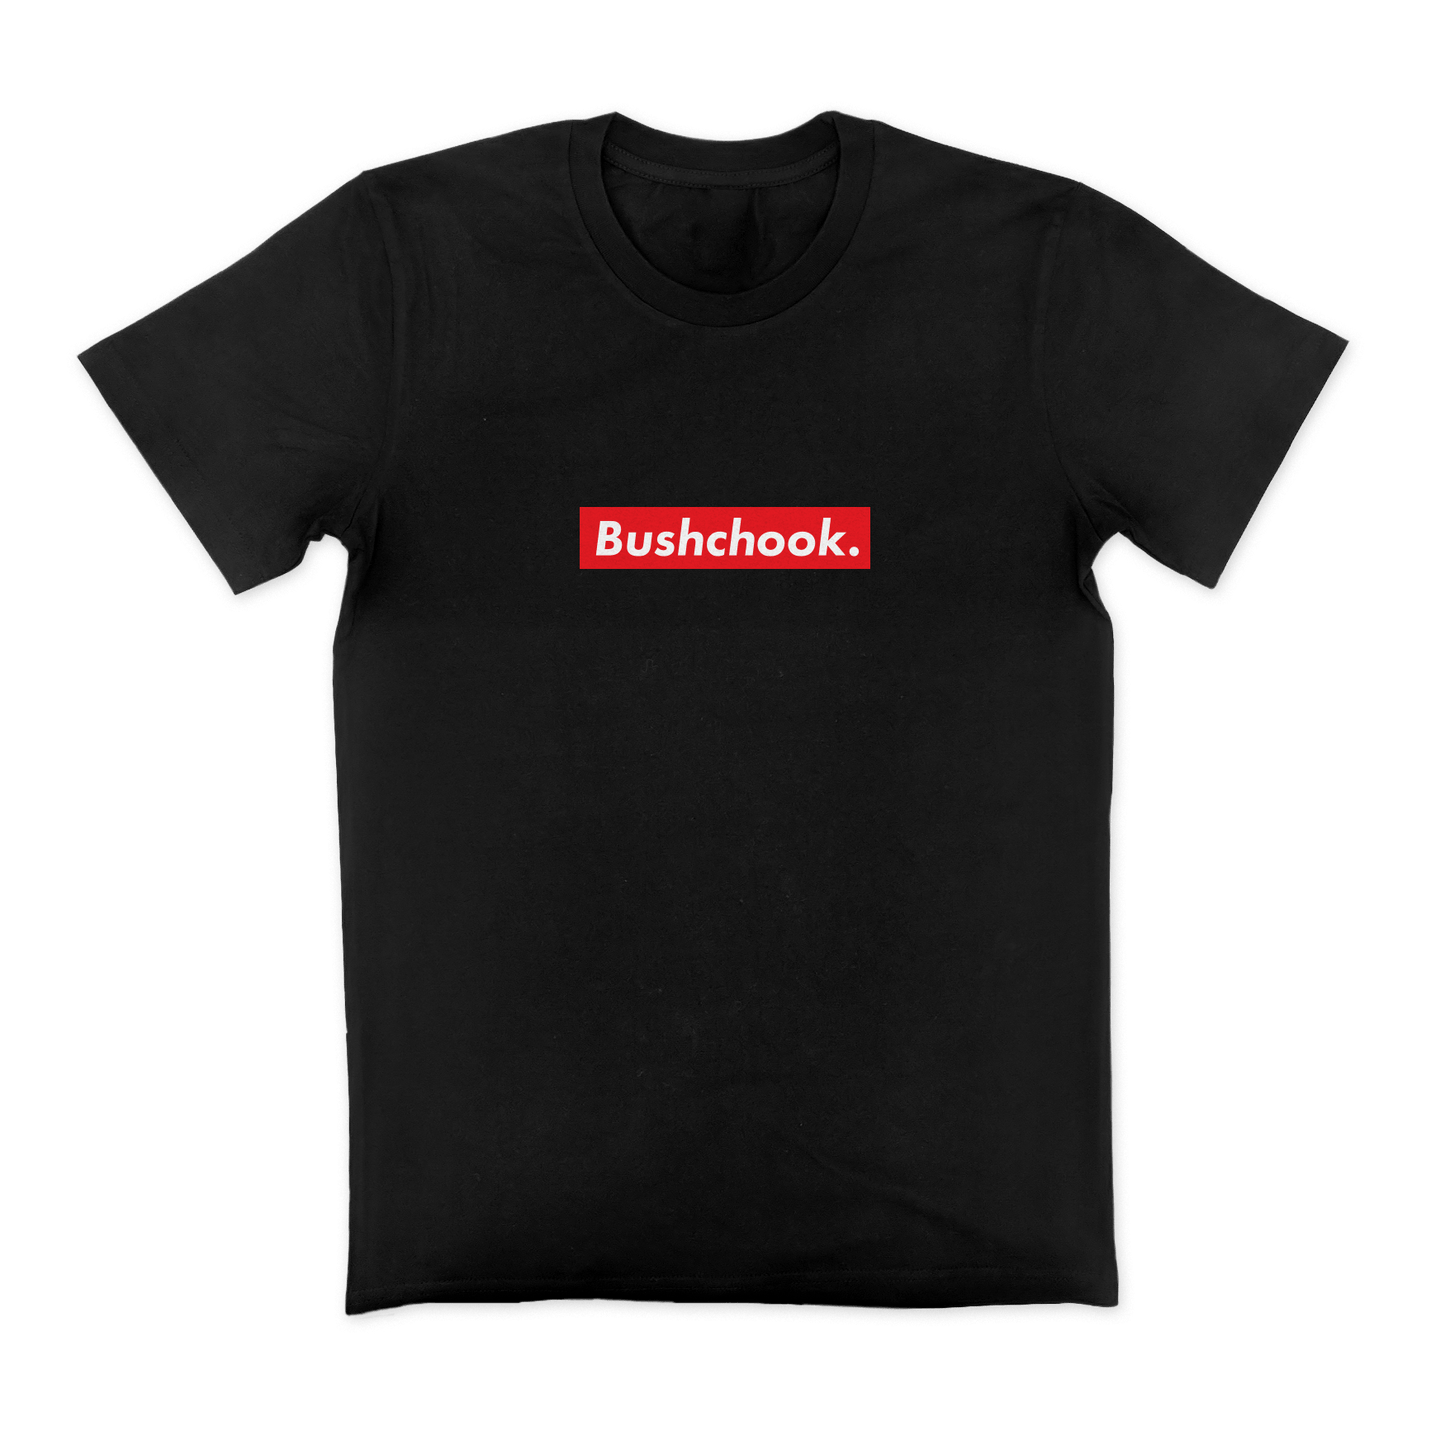 Bushpreme Tee Black T-Shirt Bush Chook